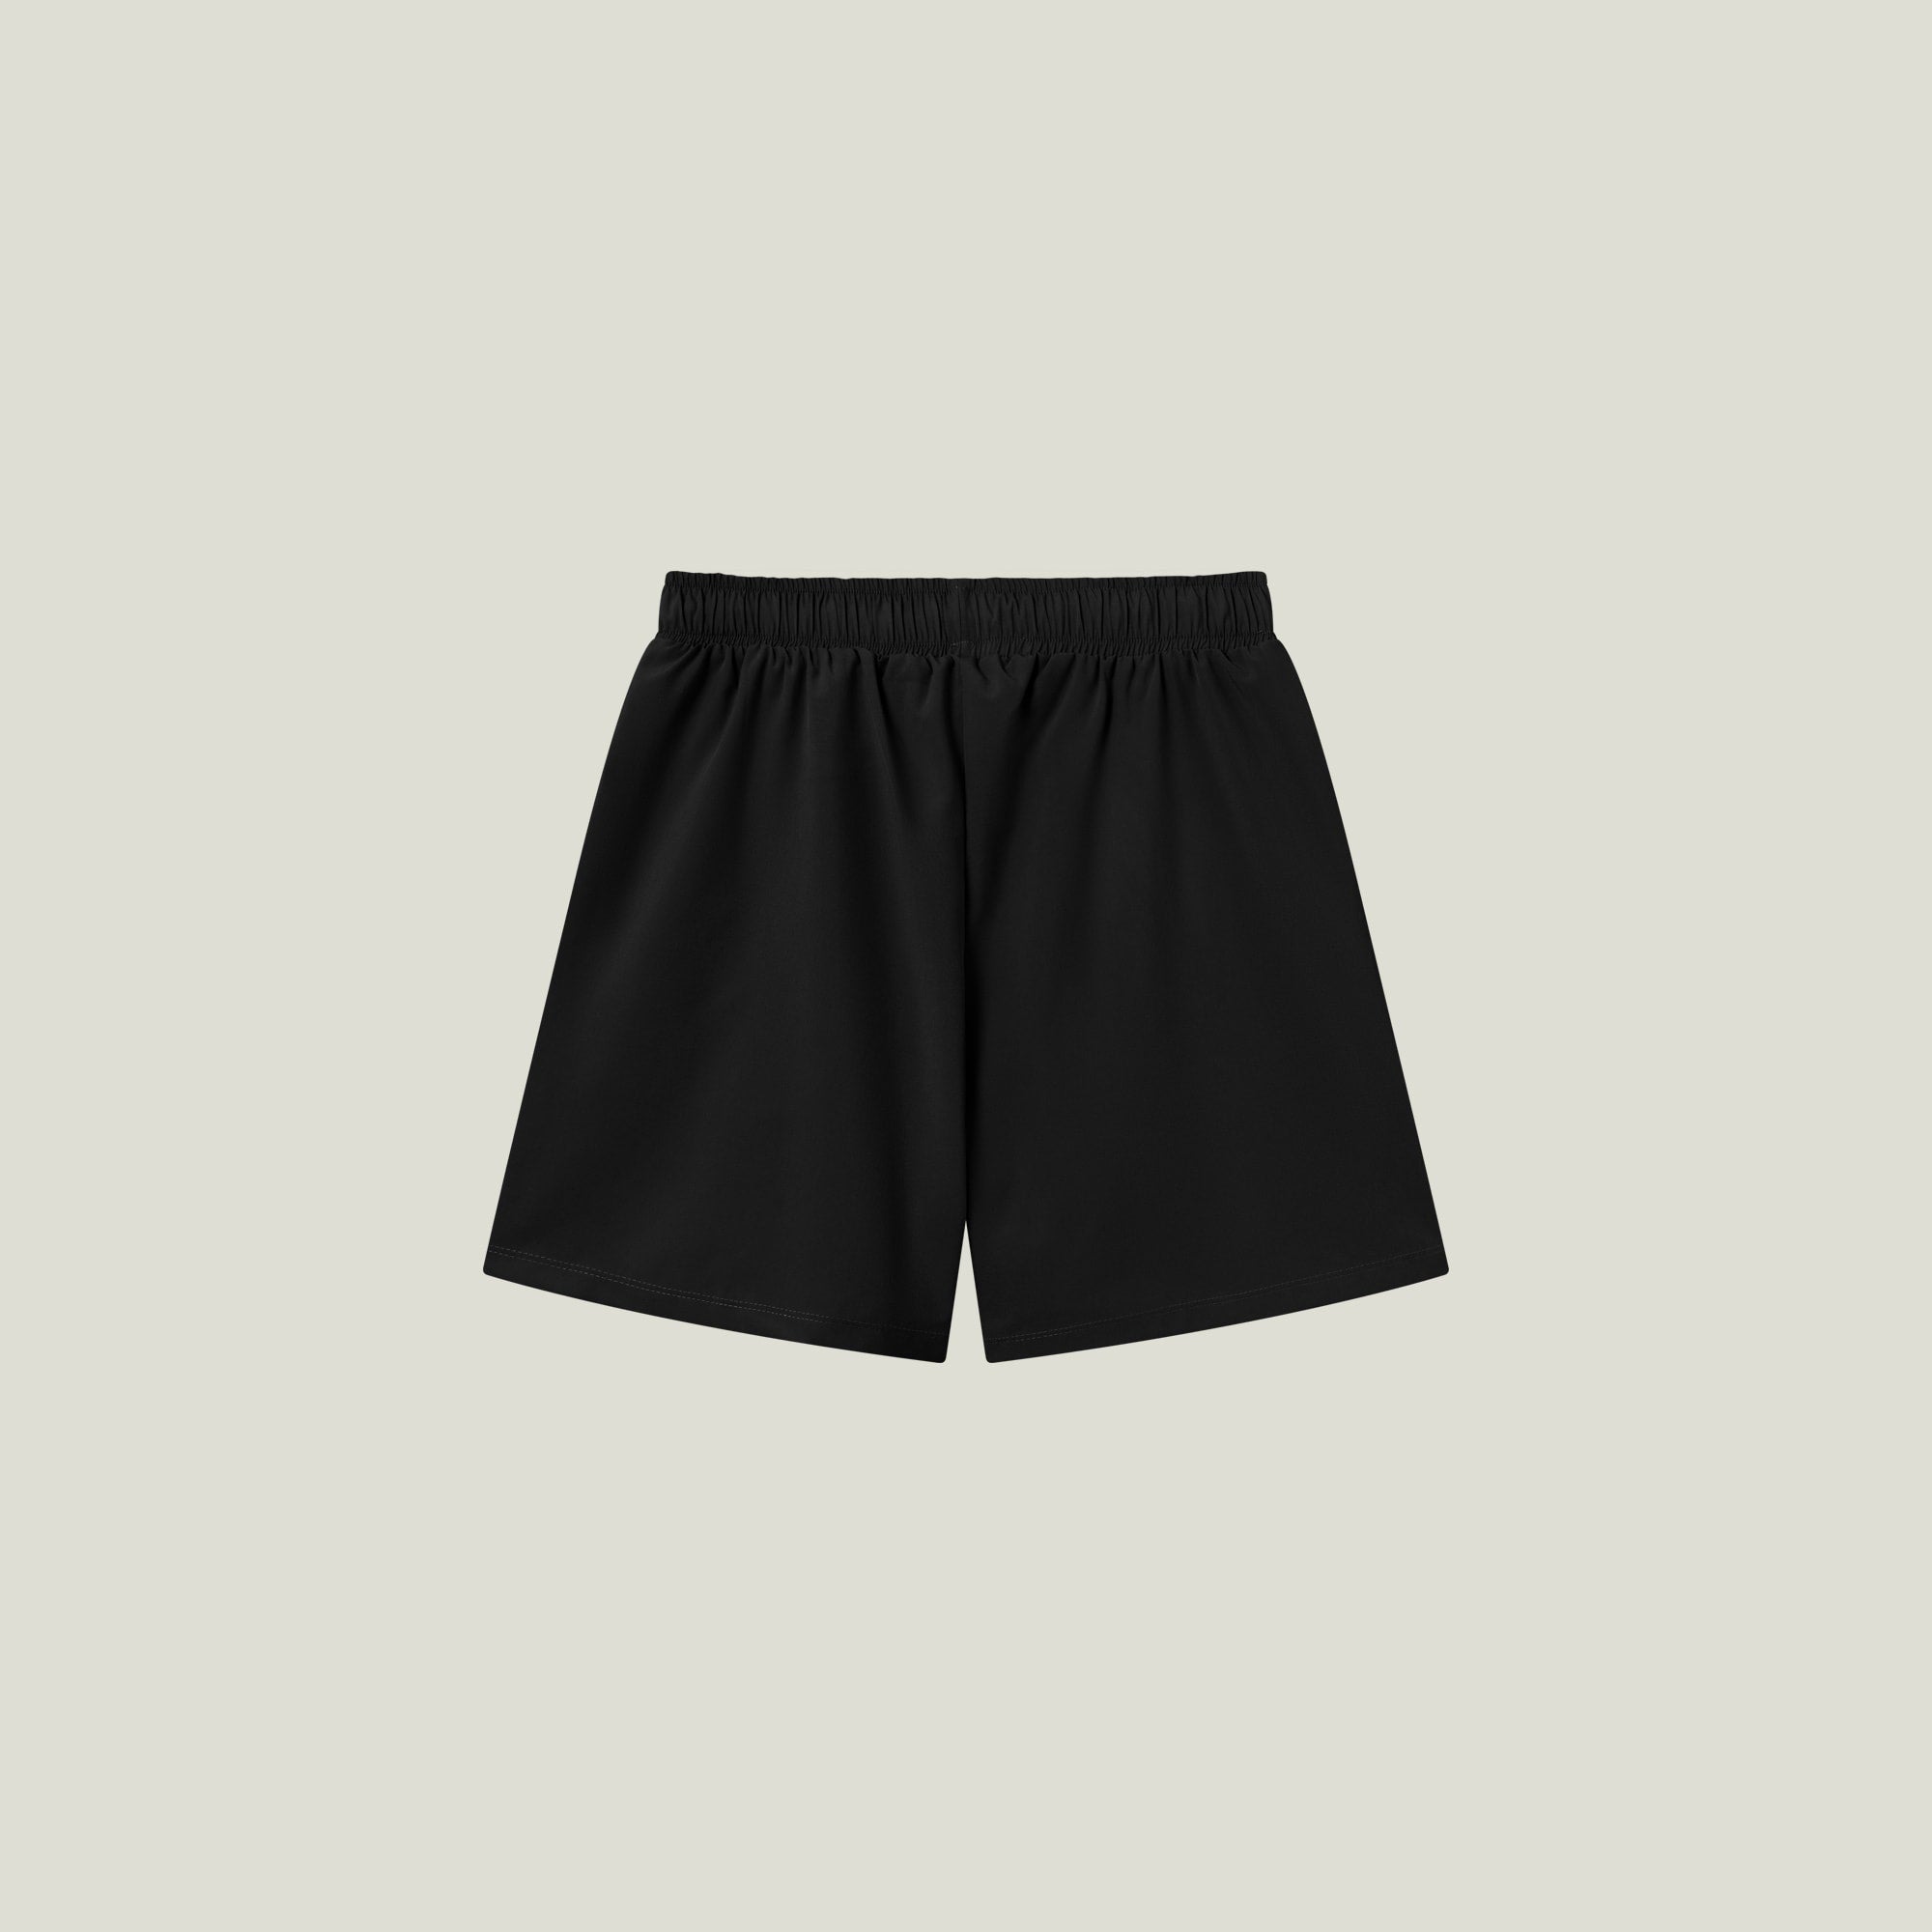 Oncourt Shorts Kit - Black Combo